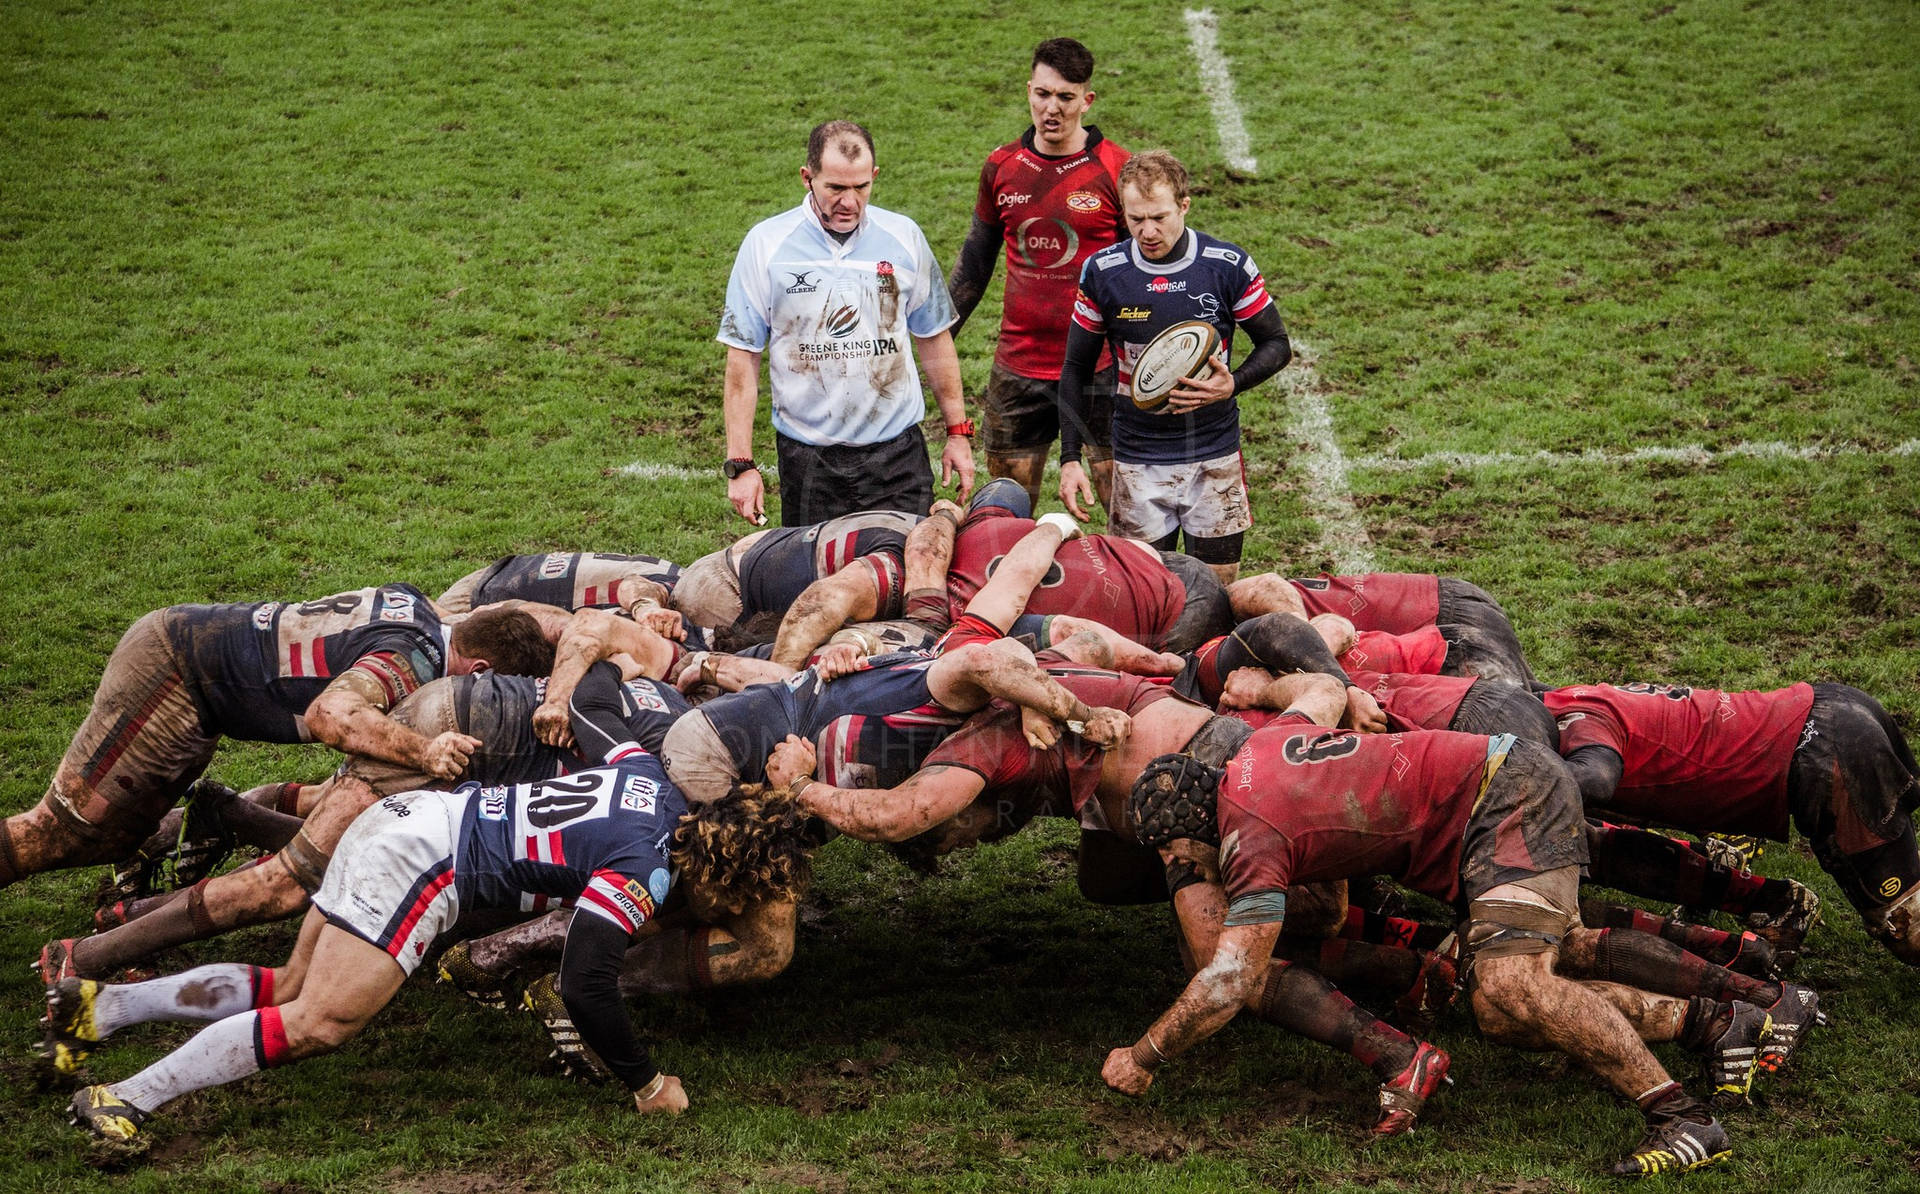 Muddy Rugby Scrum